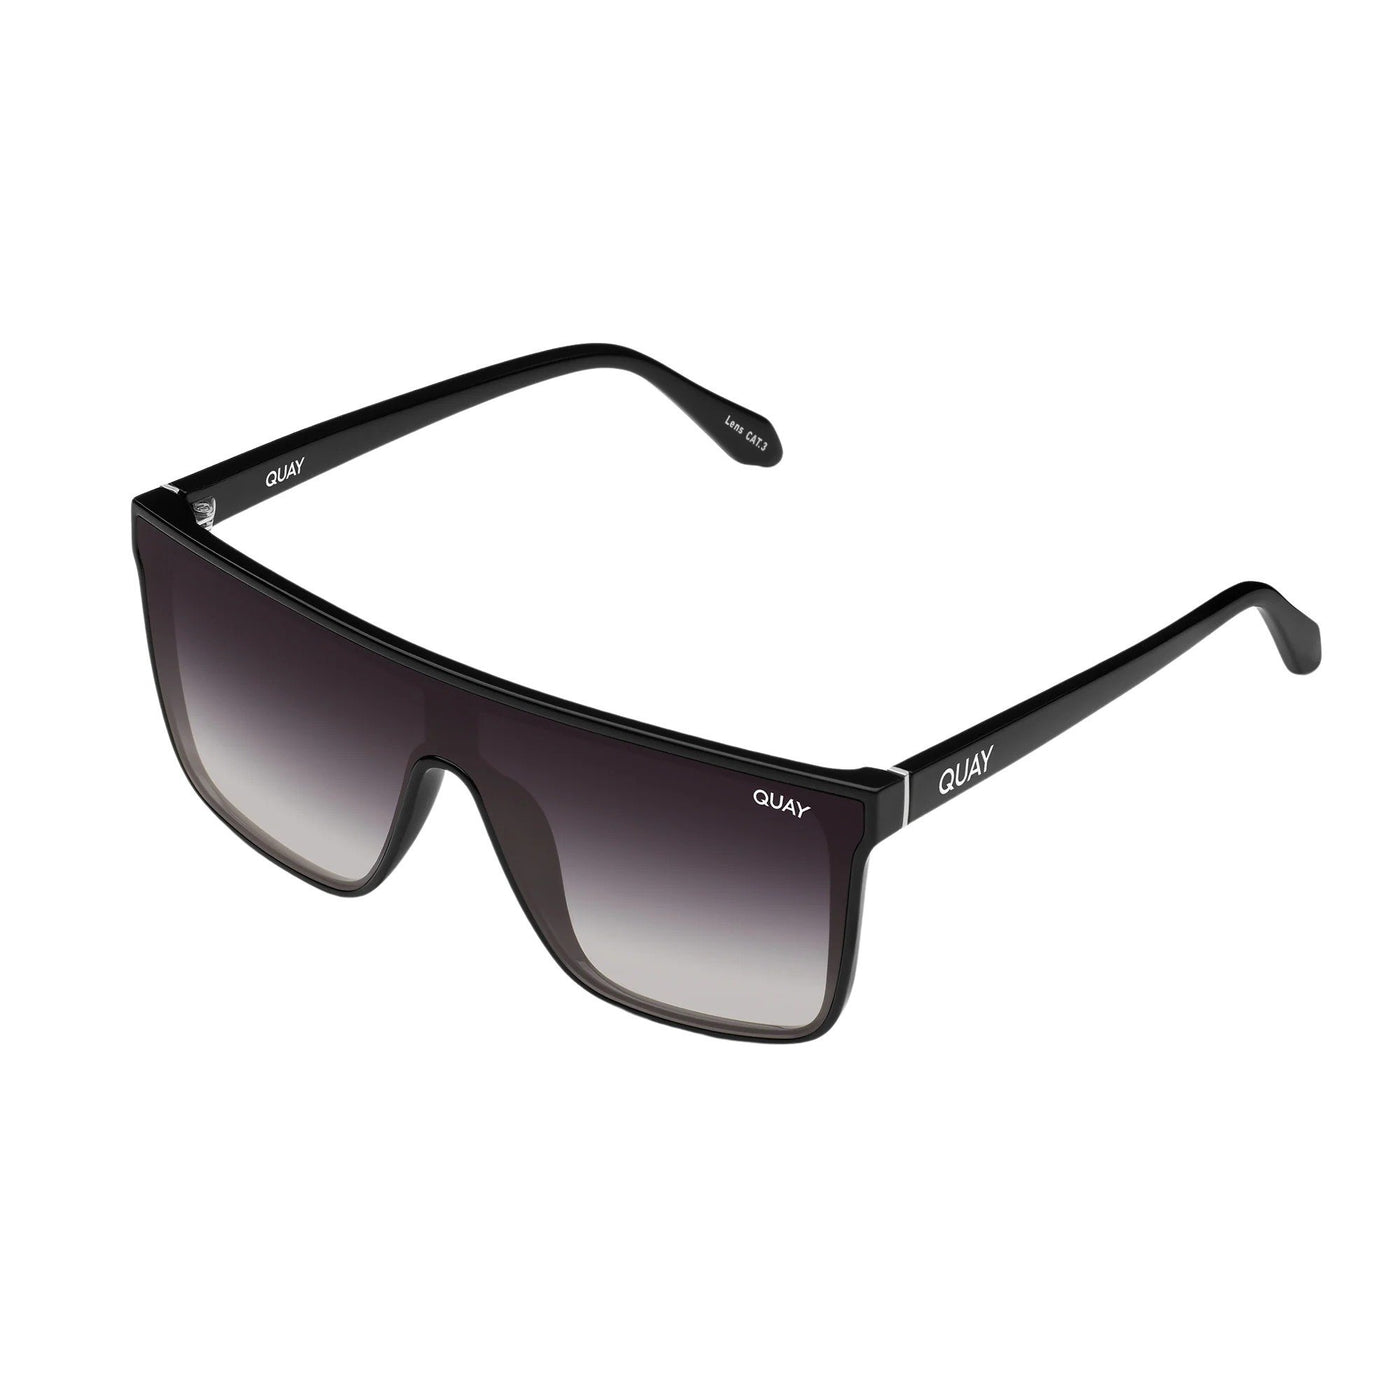 Quay Women's Nightfall Flat Top Shield Sunglasses - Black Frame/Black Fade Polarized Lens  - 3/4 left angle